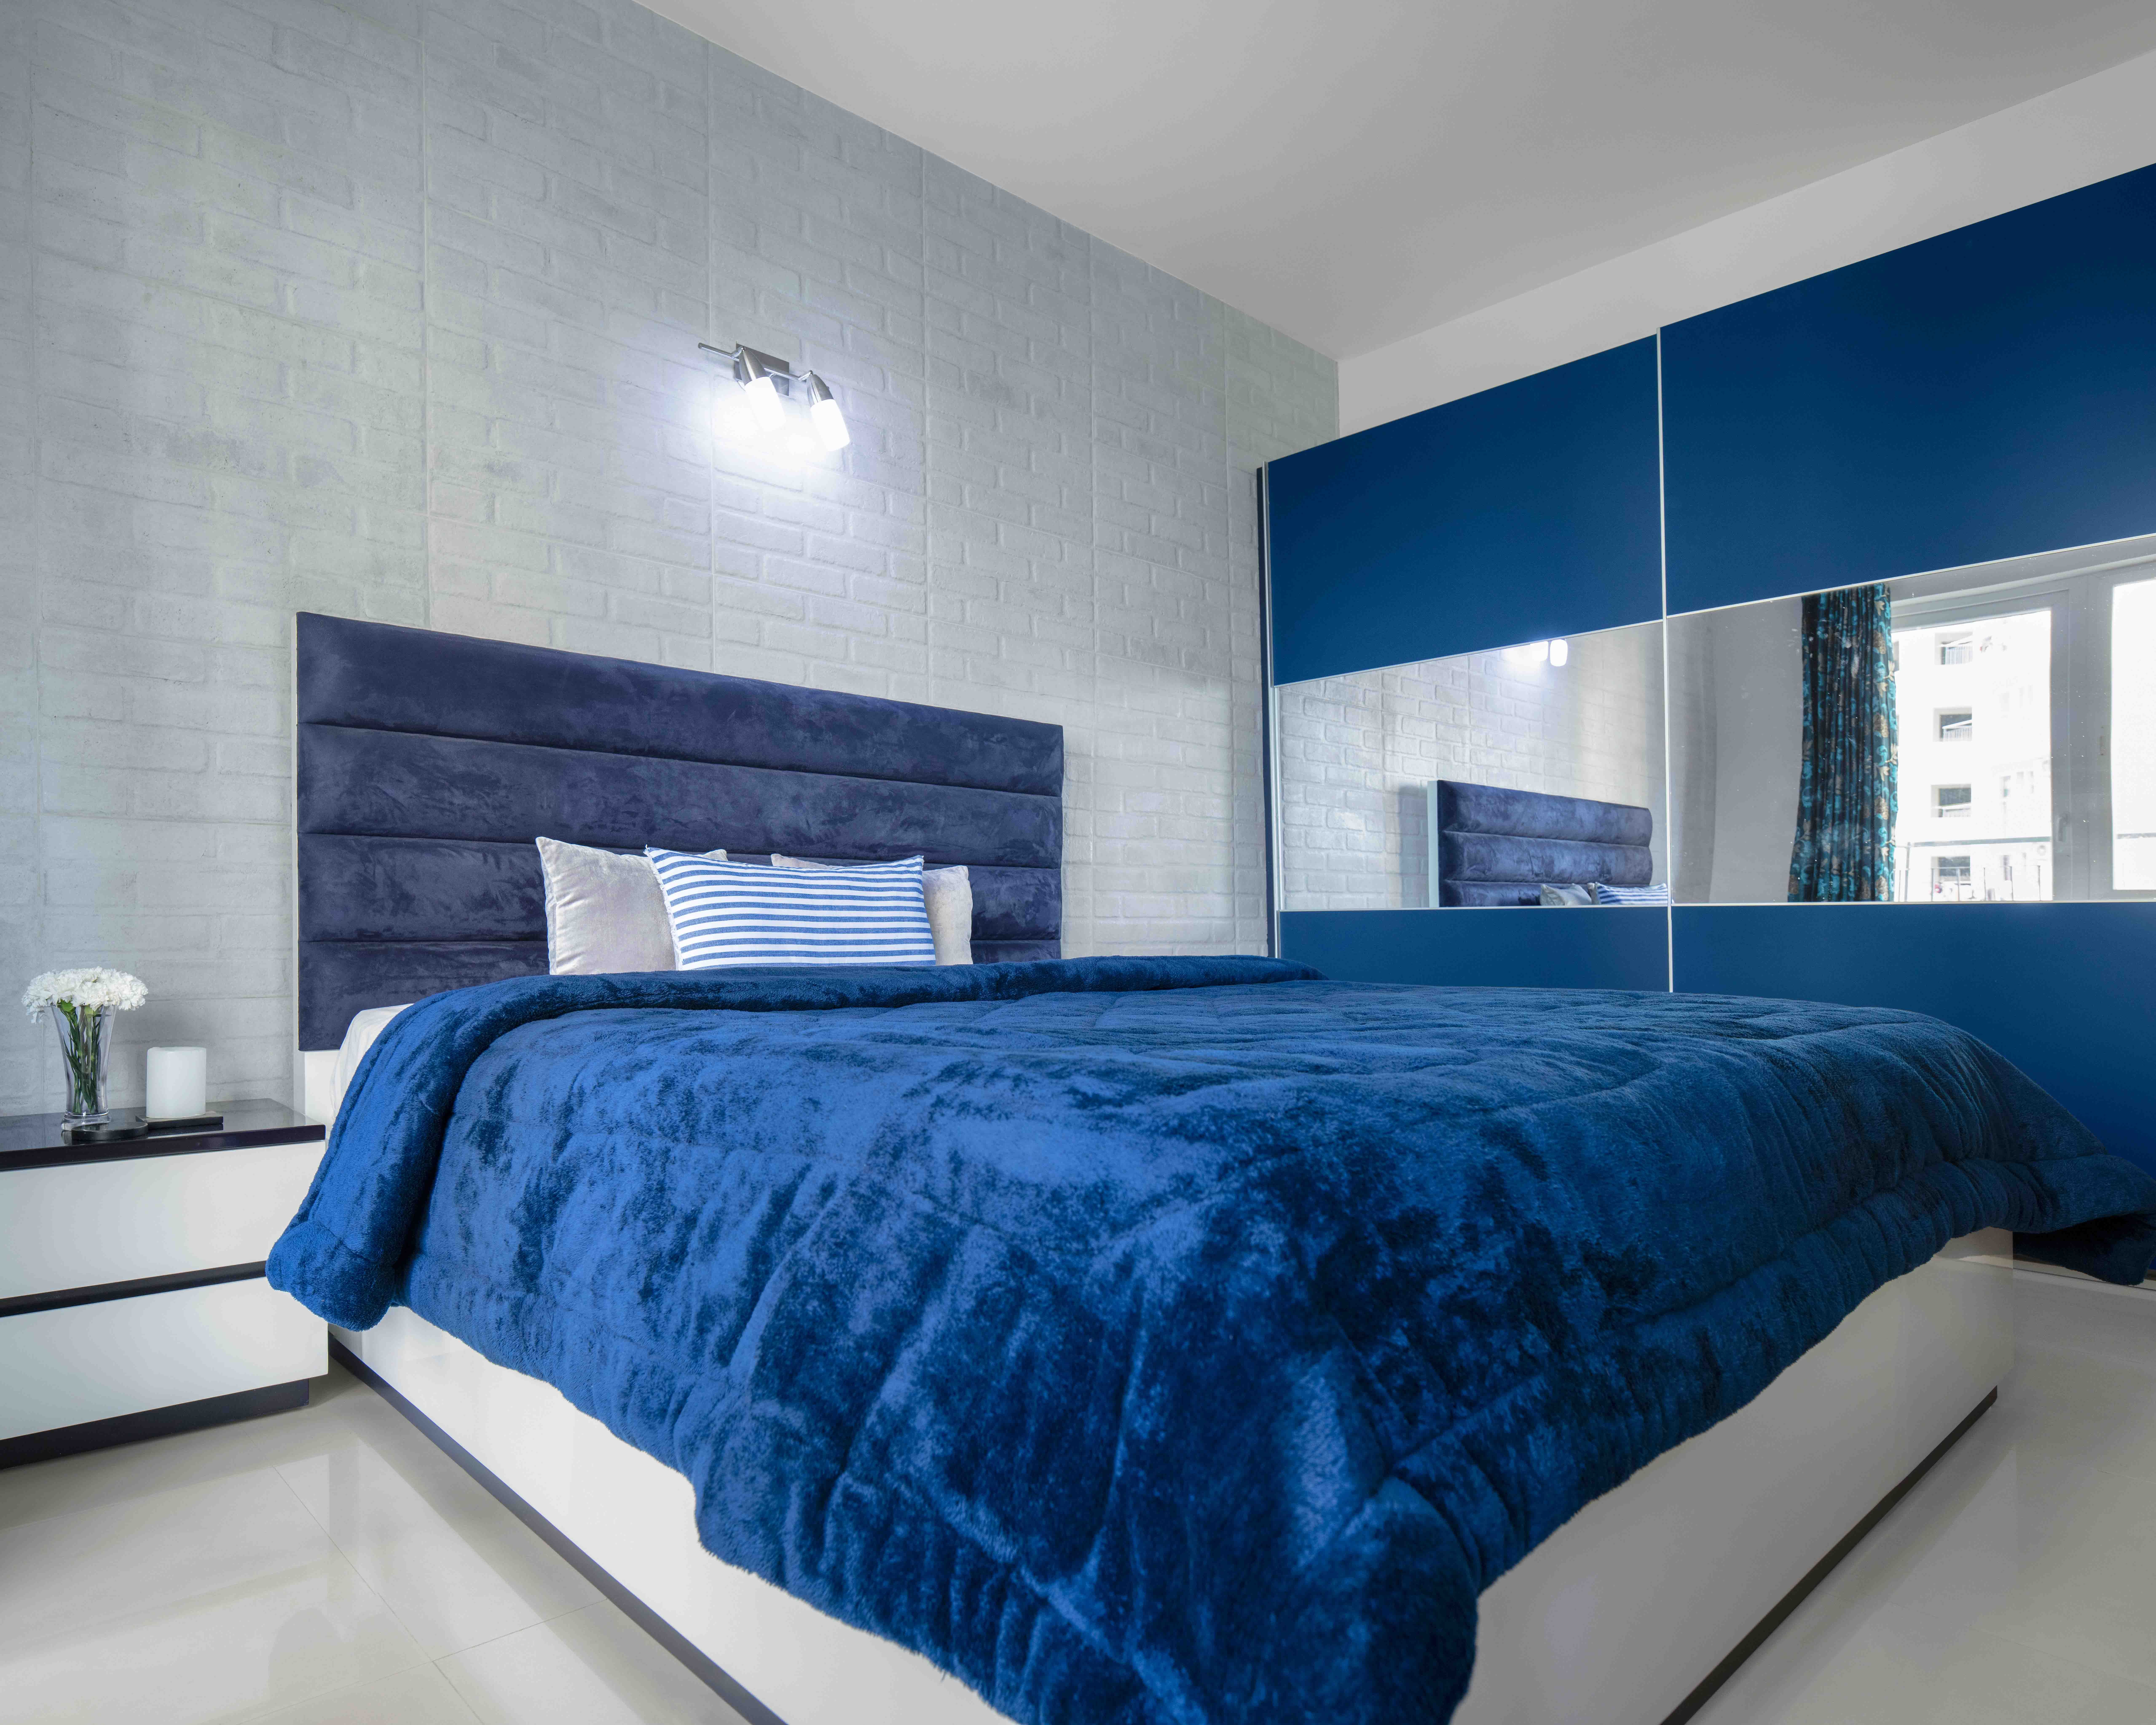 Contemporary Blue And White Bedroom Design 2-Door Blue Sliding Mirrored Wardrobe